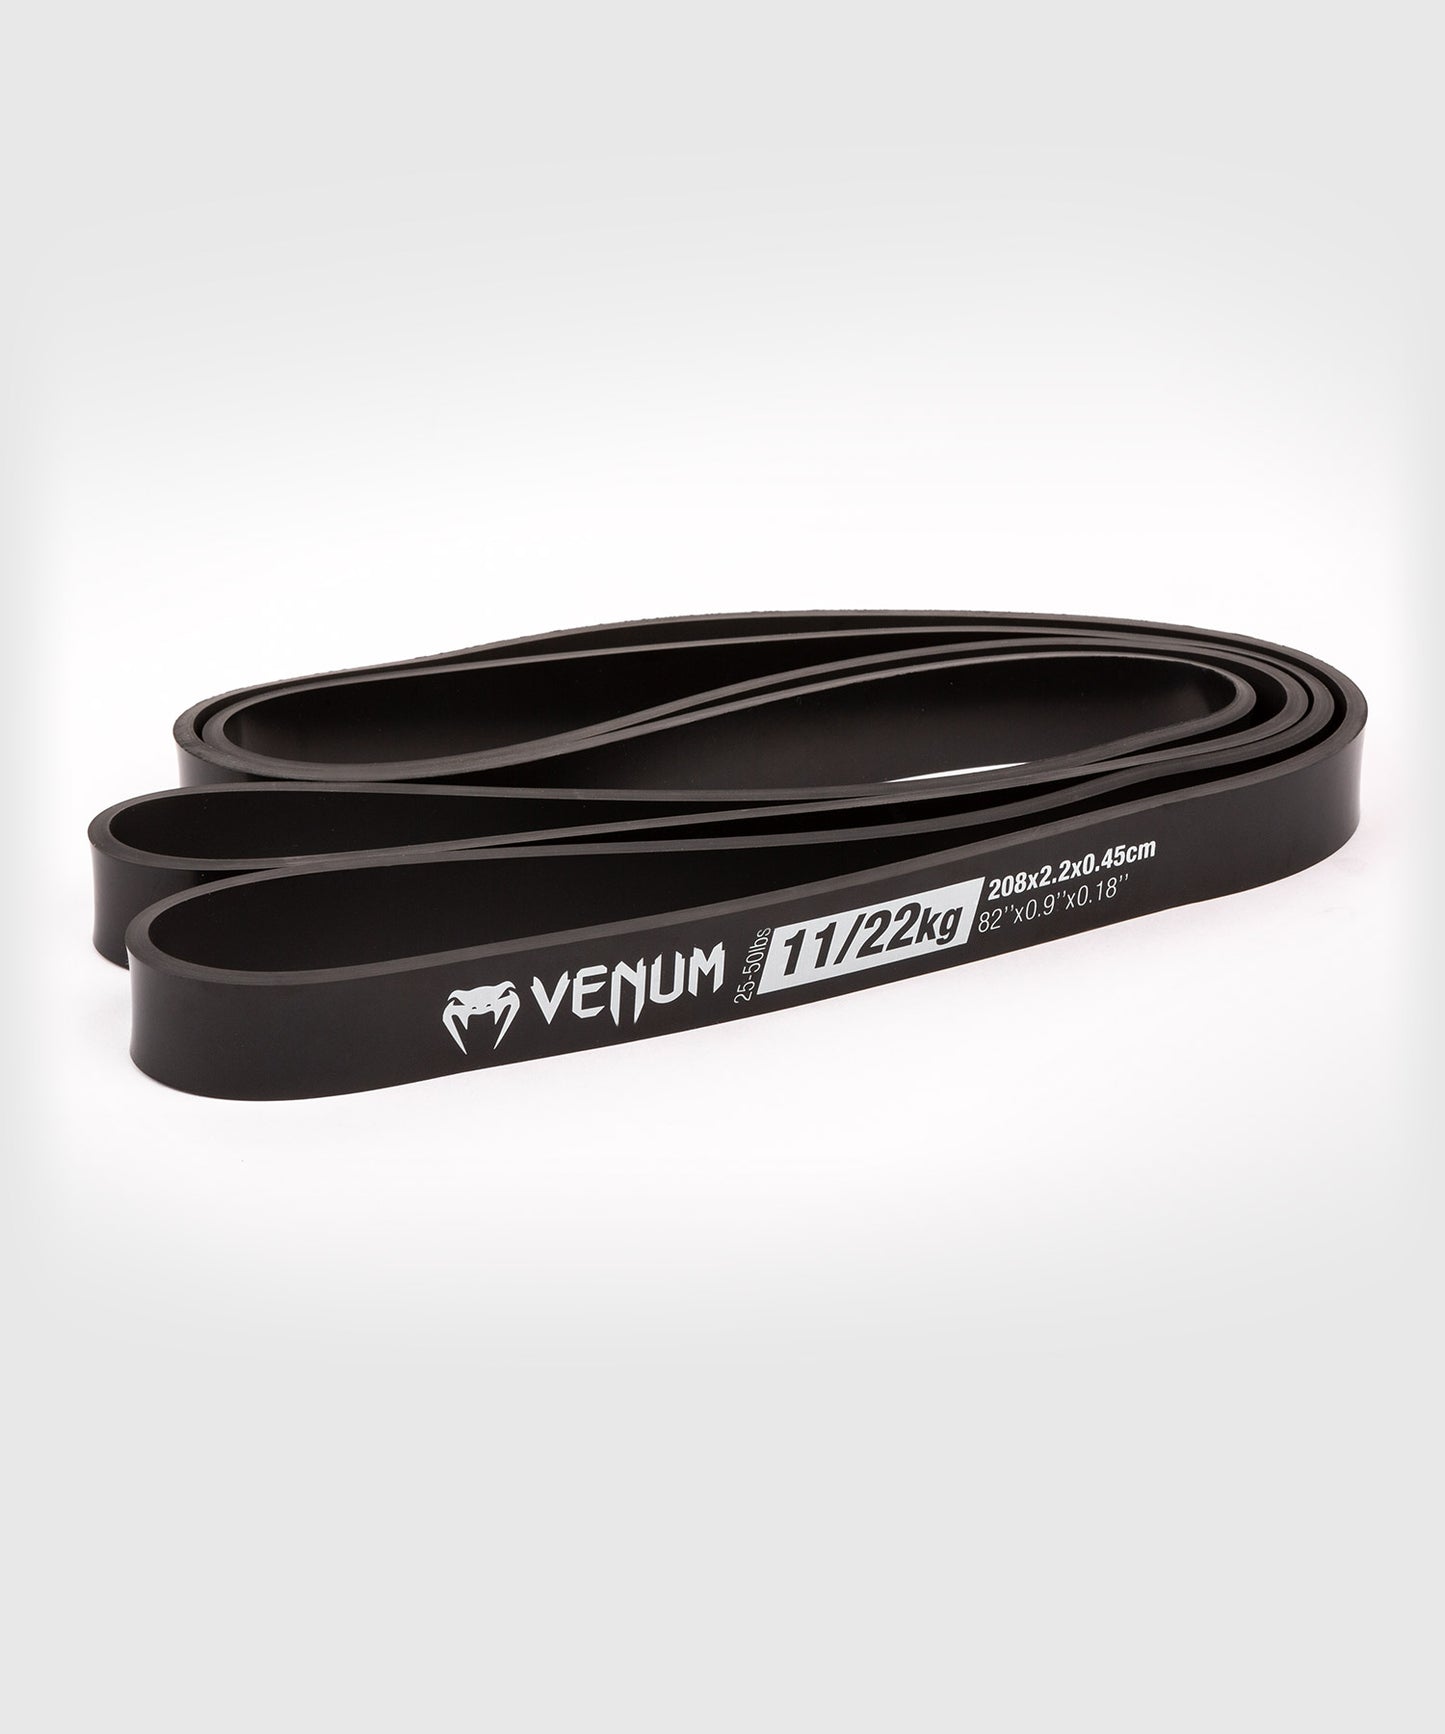 Venum Challenger Resistance band- Black - 25-50lbs